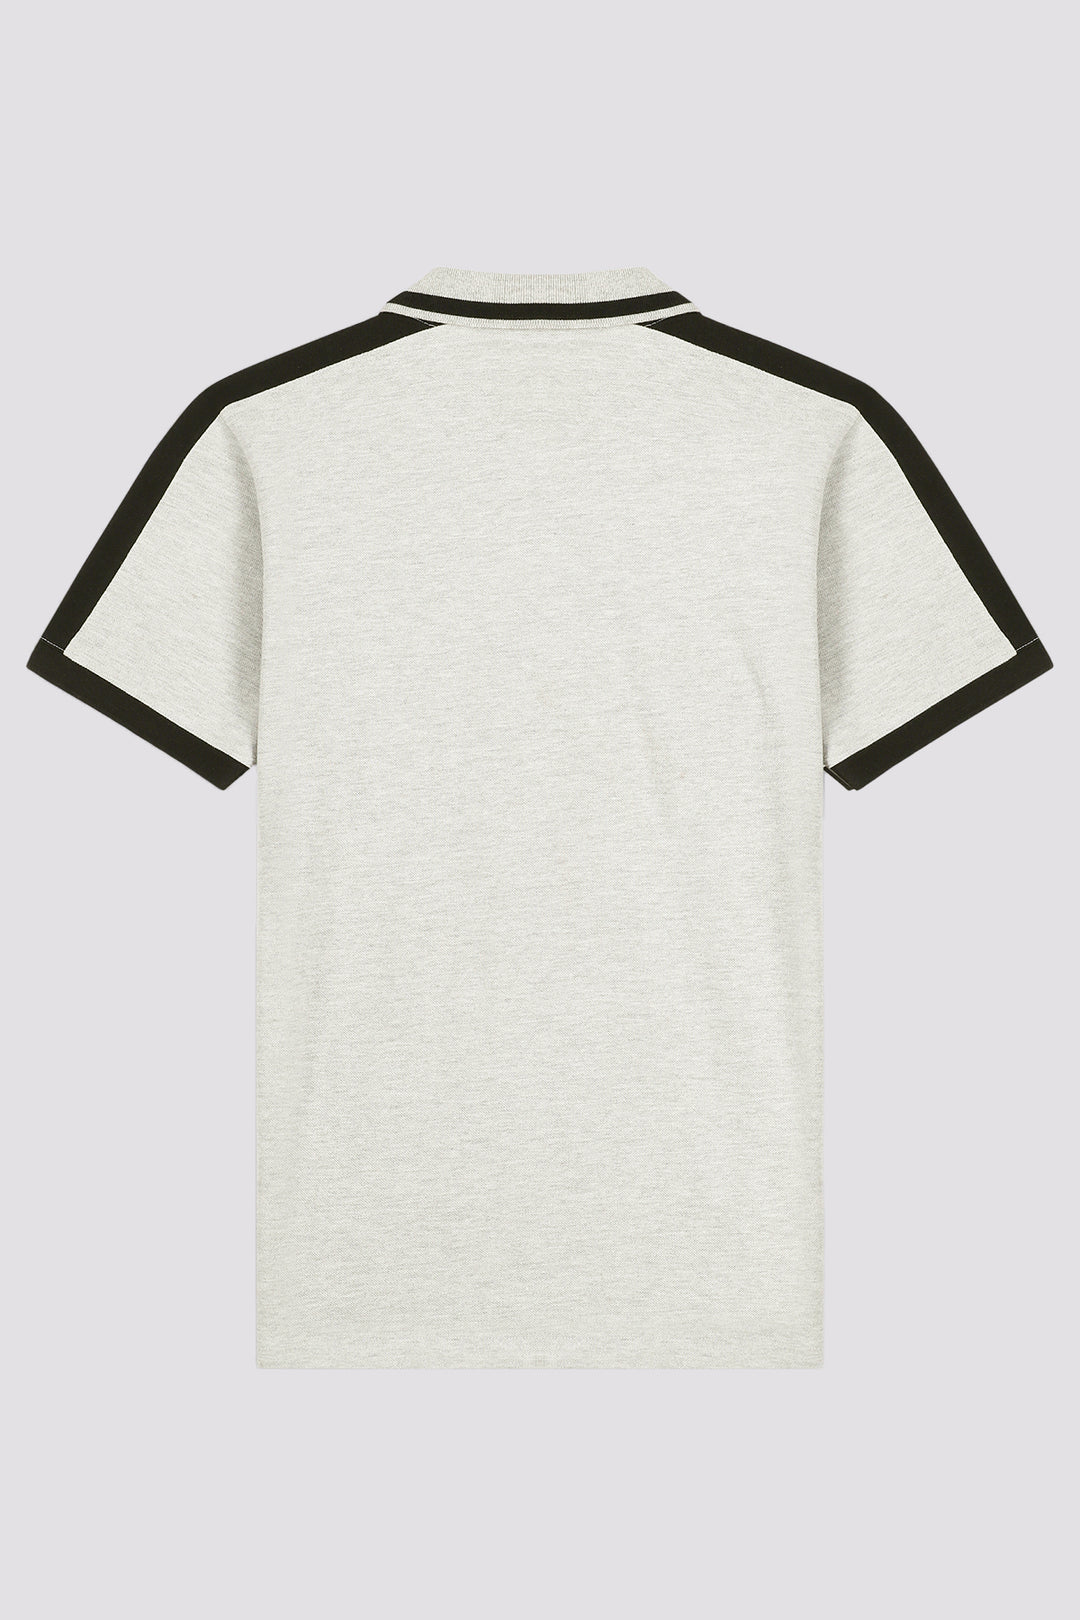 Grey Contrast Paneled Polo Shirt (Plus Size) - A24 - MP0249P